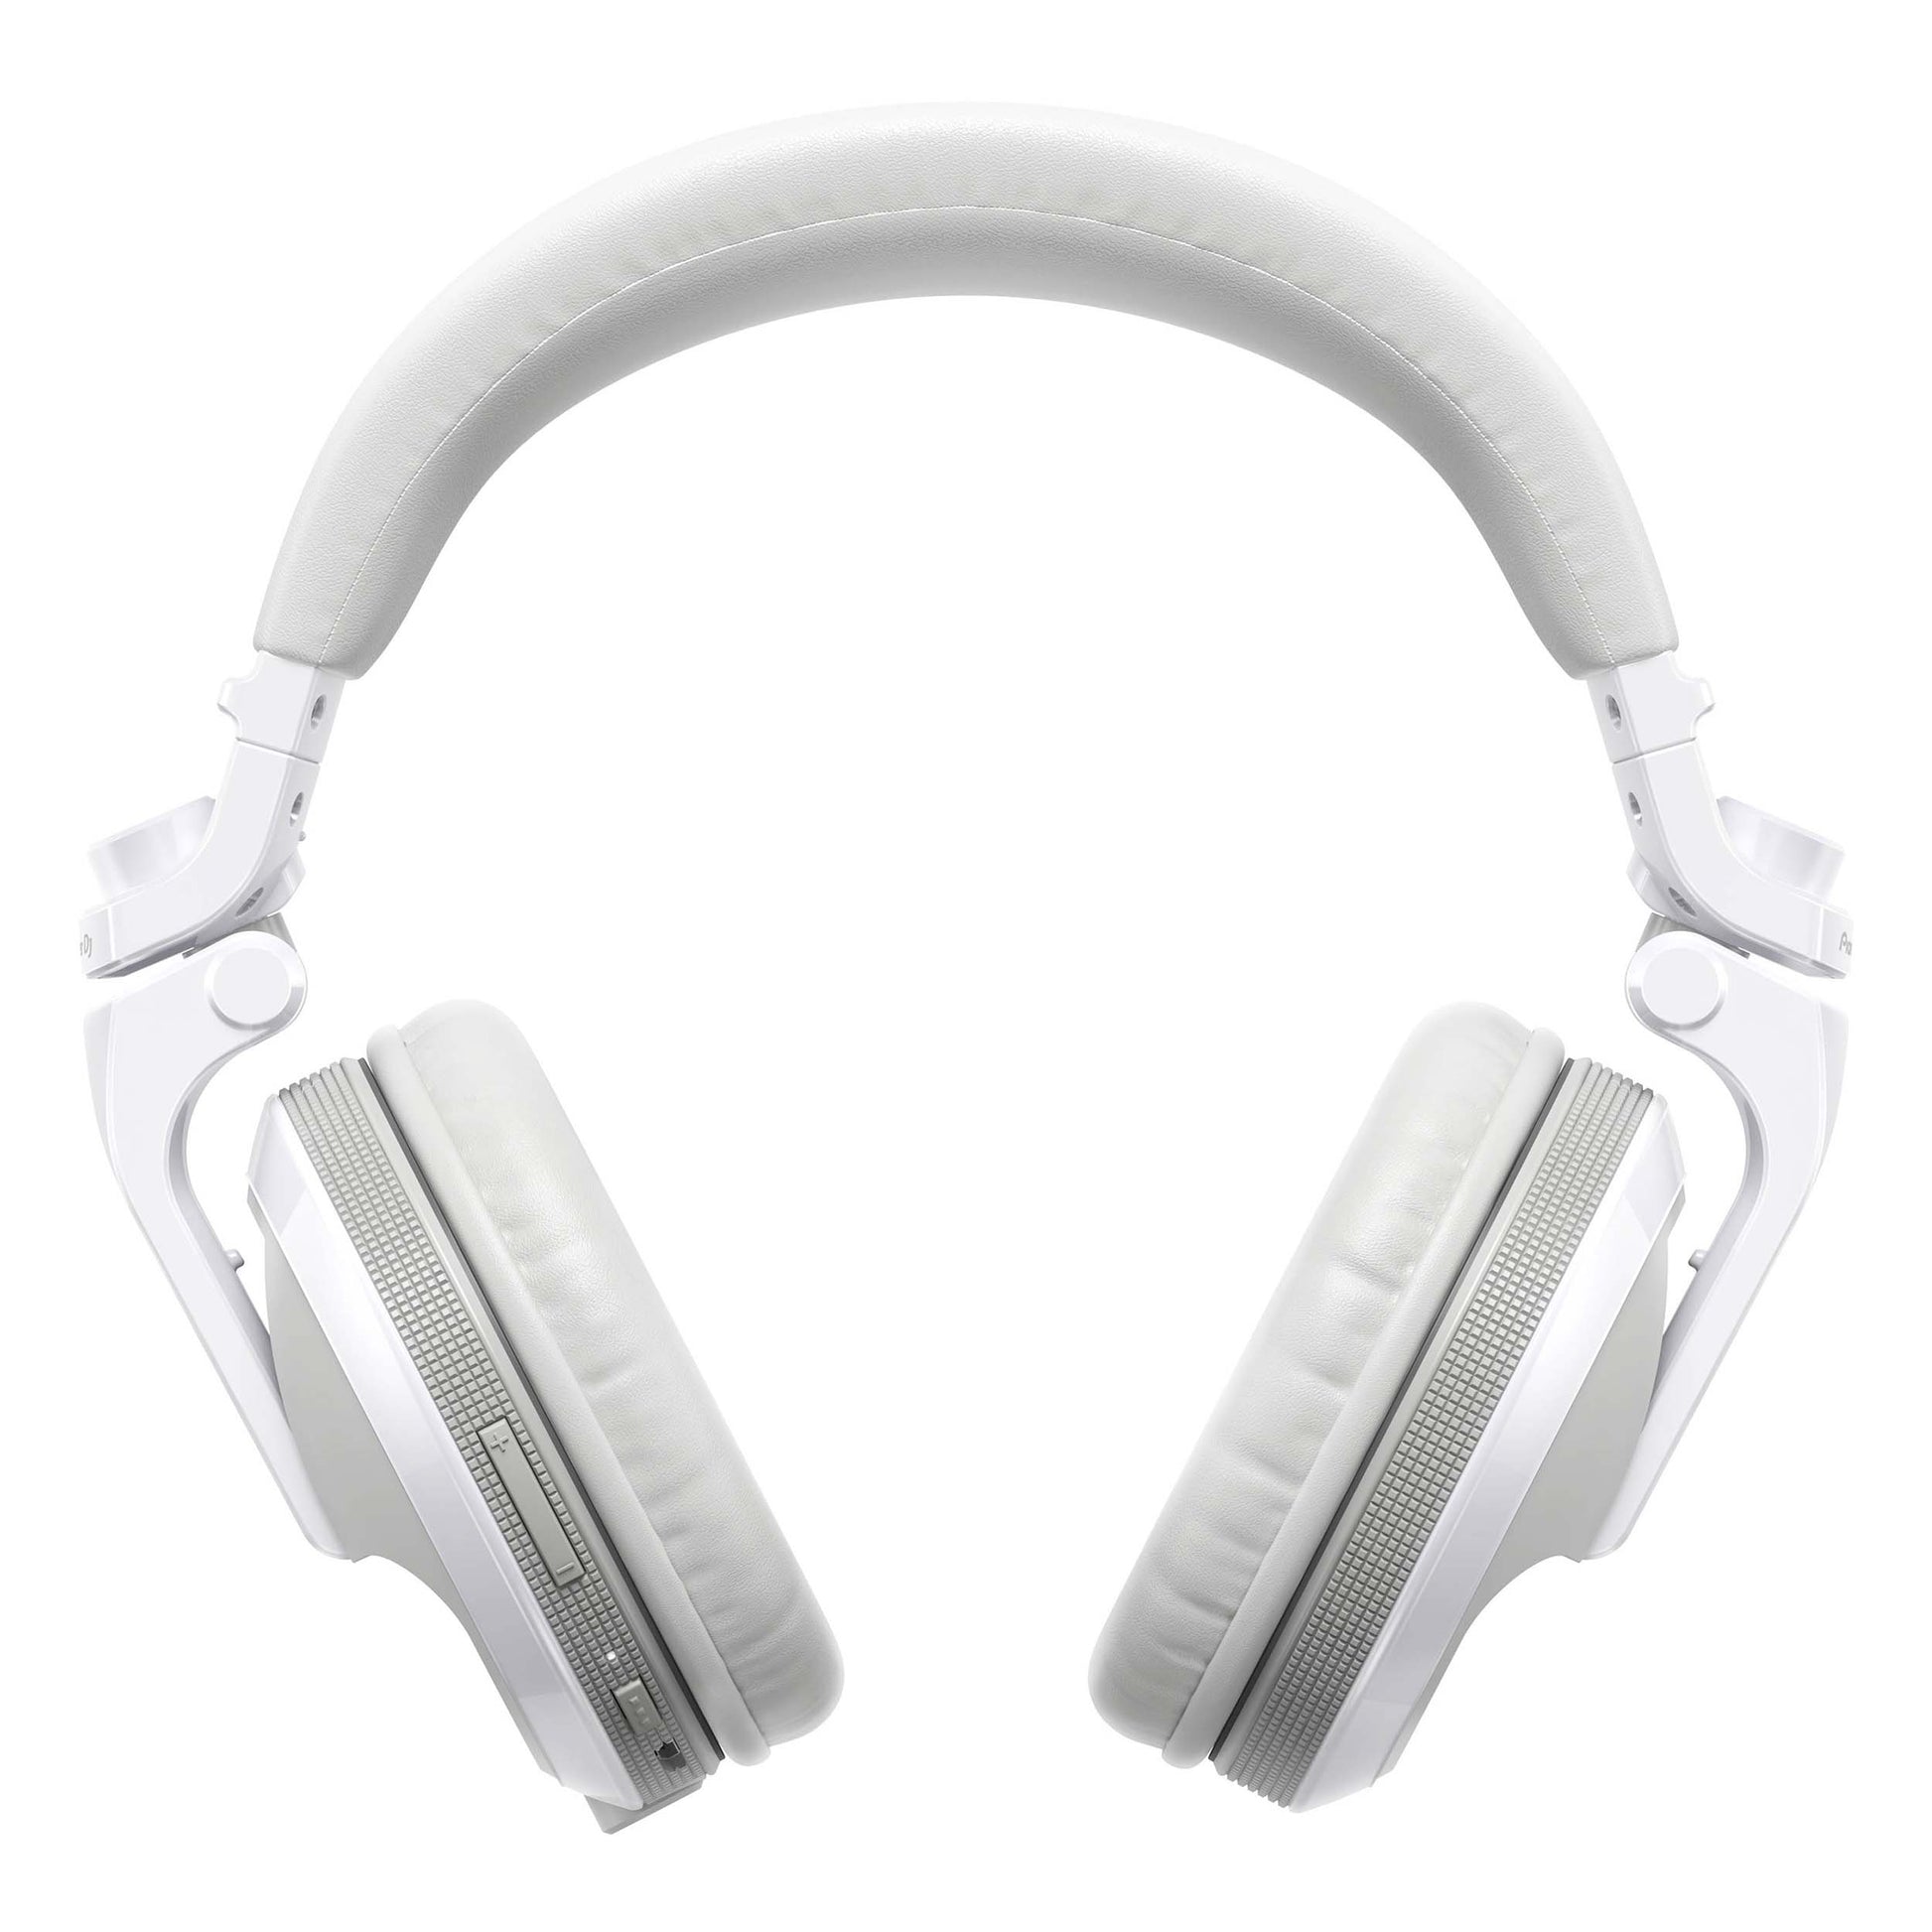 HDJ-X5 Over-ear DJ headphones (black) - Pioneer DJ